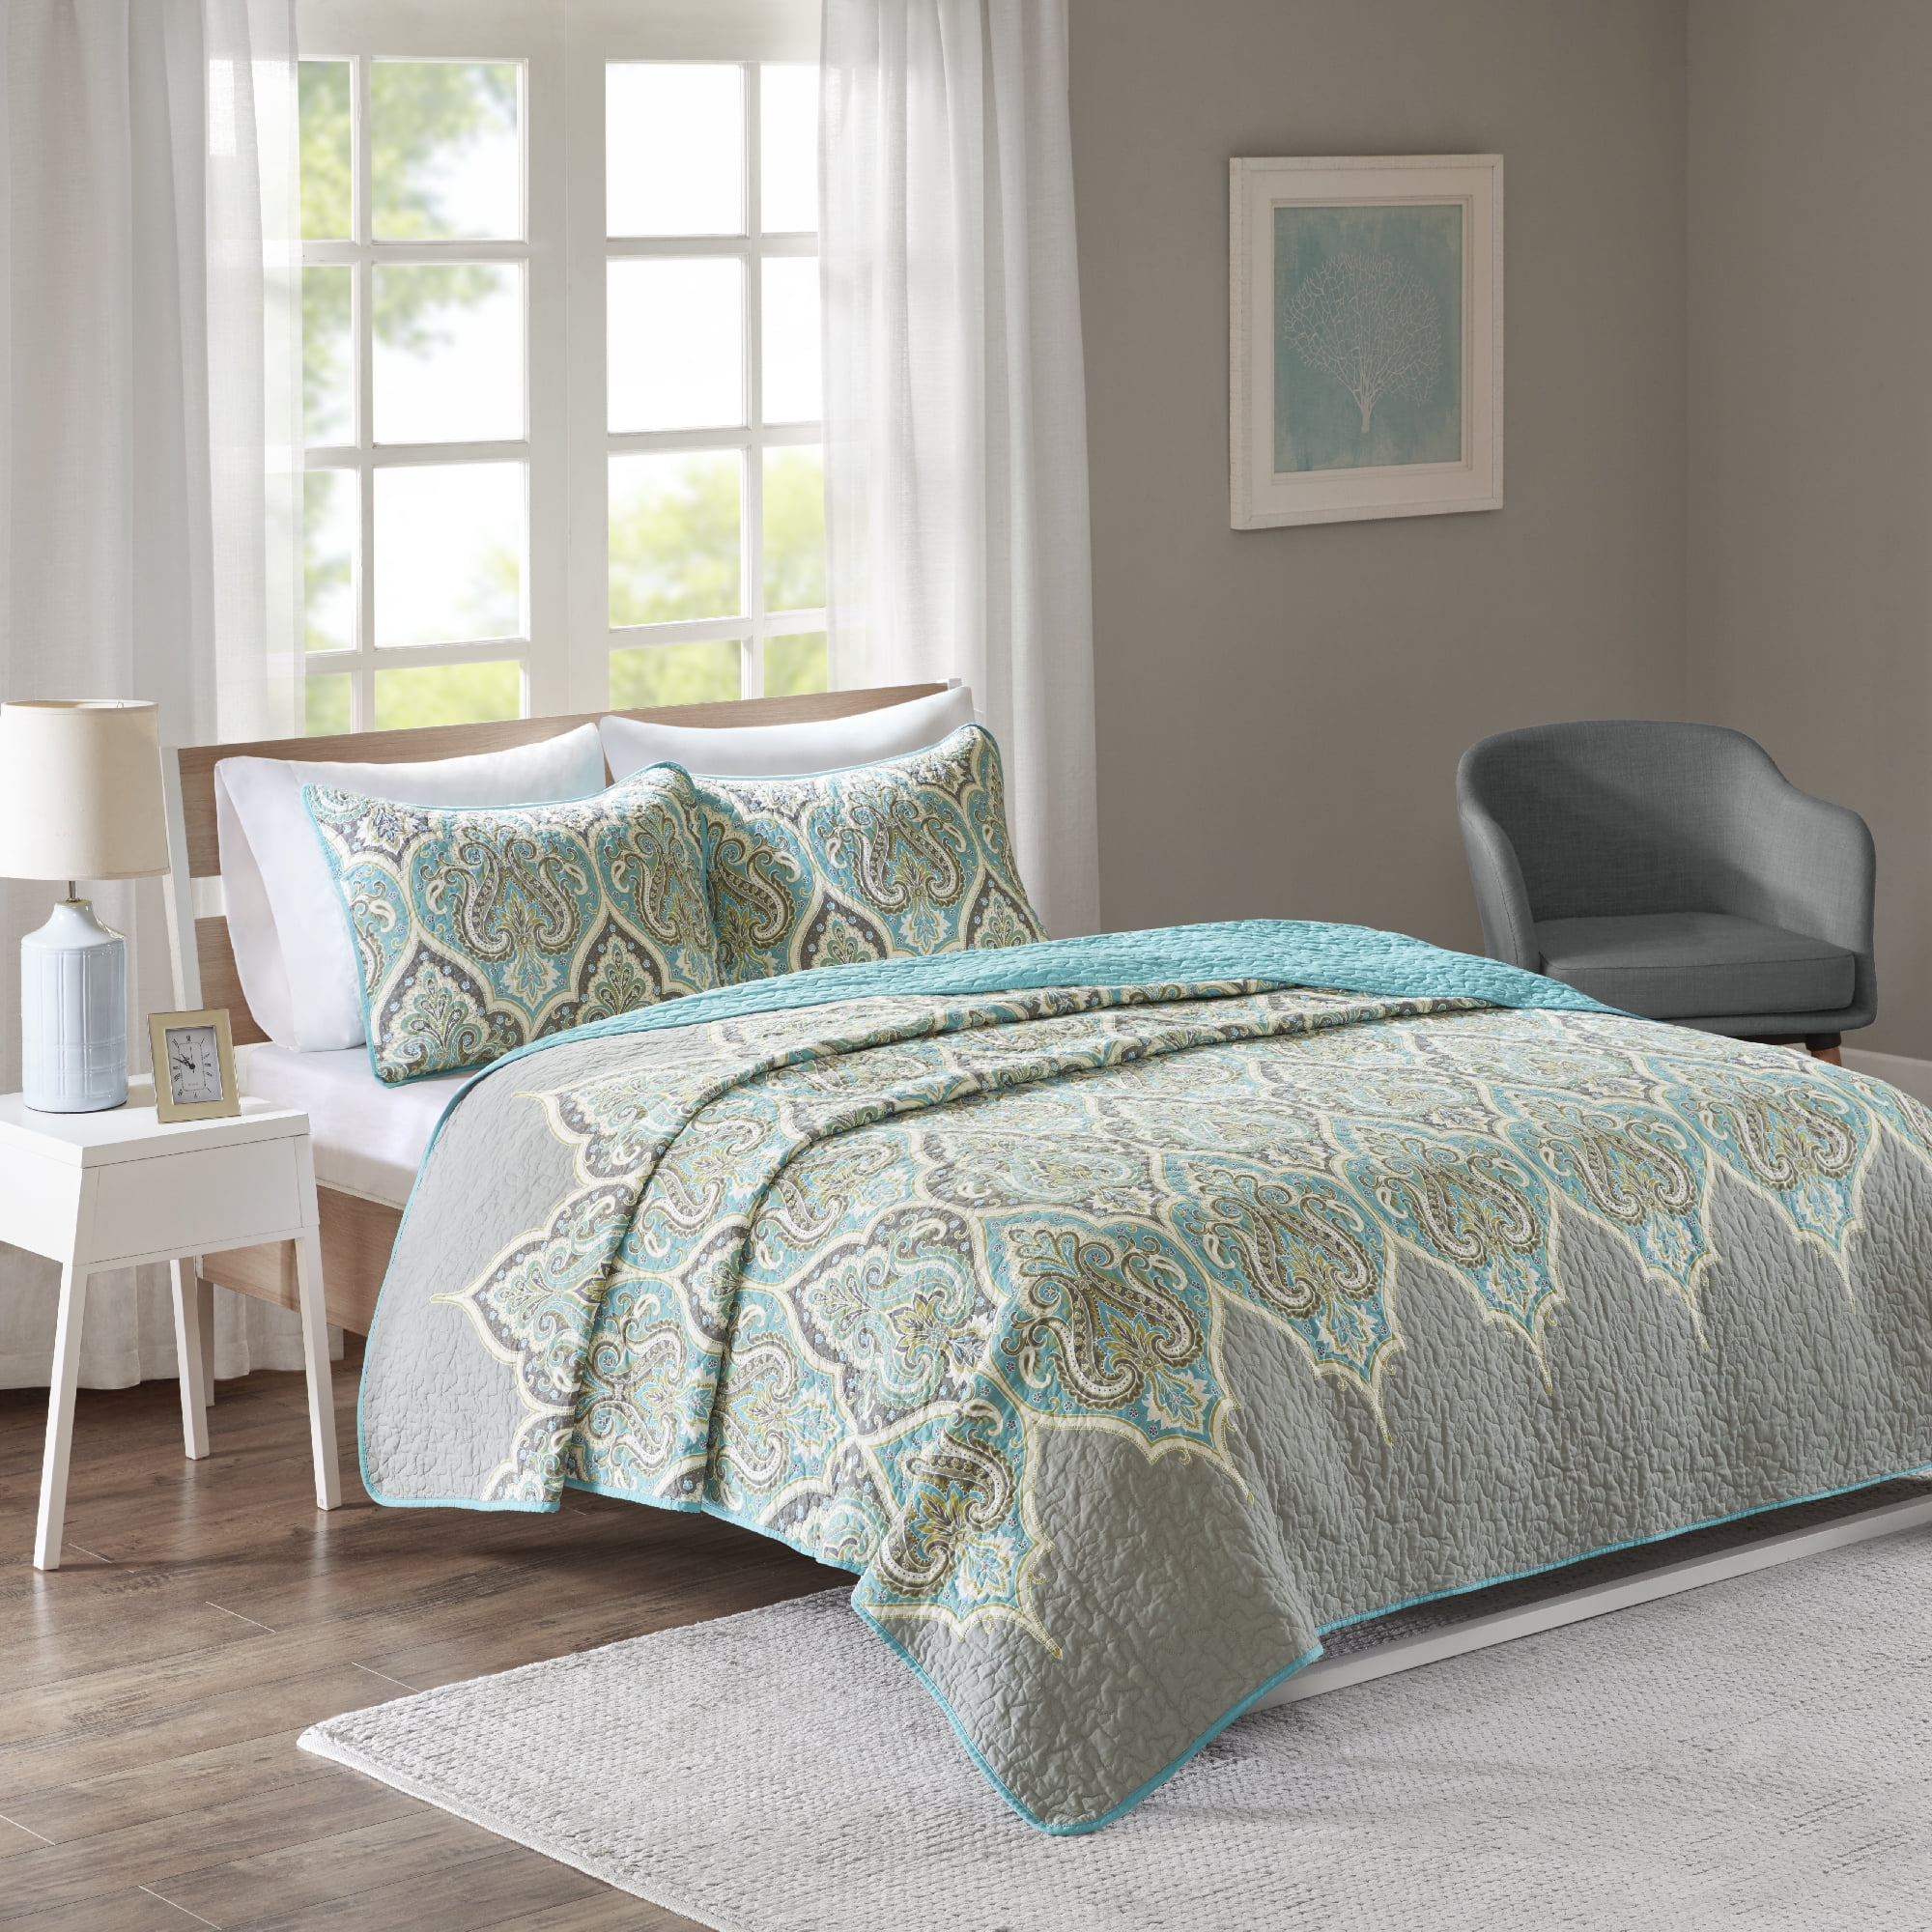 Details about   Comfort Spaces Pierre 4 Piece Comforter Set All Season Ultra Soft Hypoallergenic 